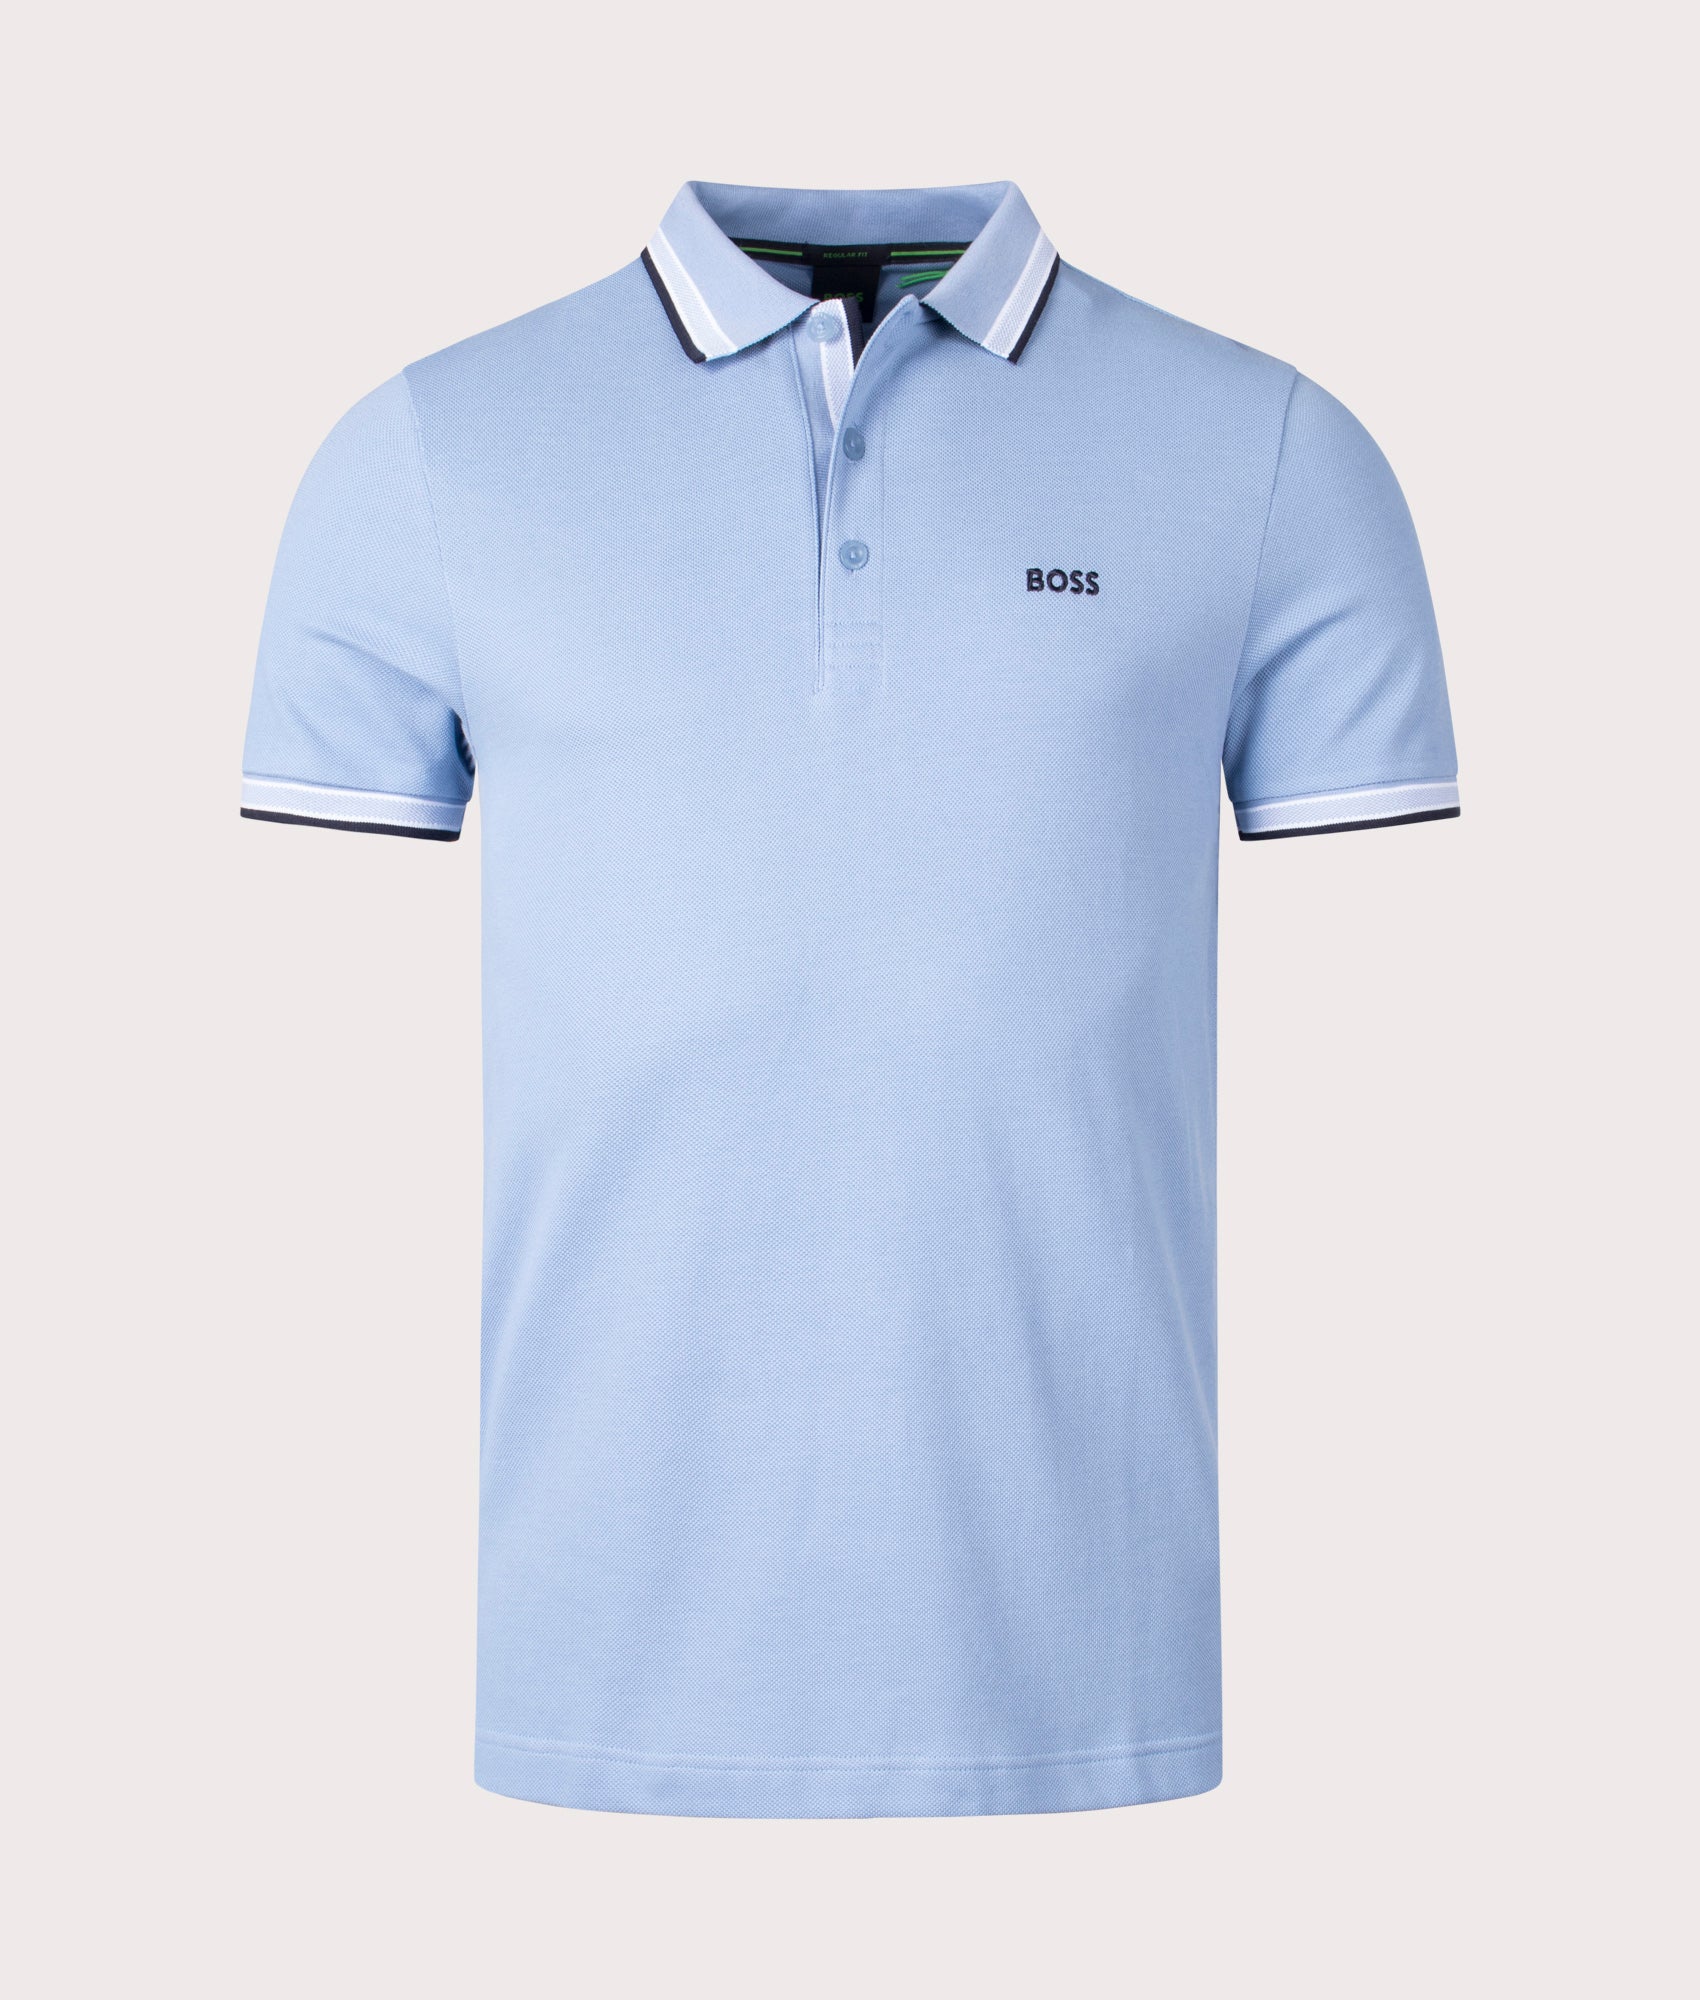 BOSS Mens Paddy Polo Shirt - Colour: 498 Open Blue - Size: XL